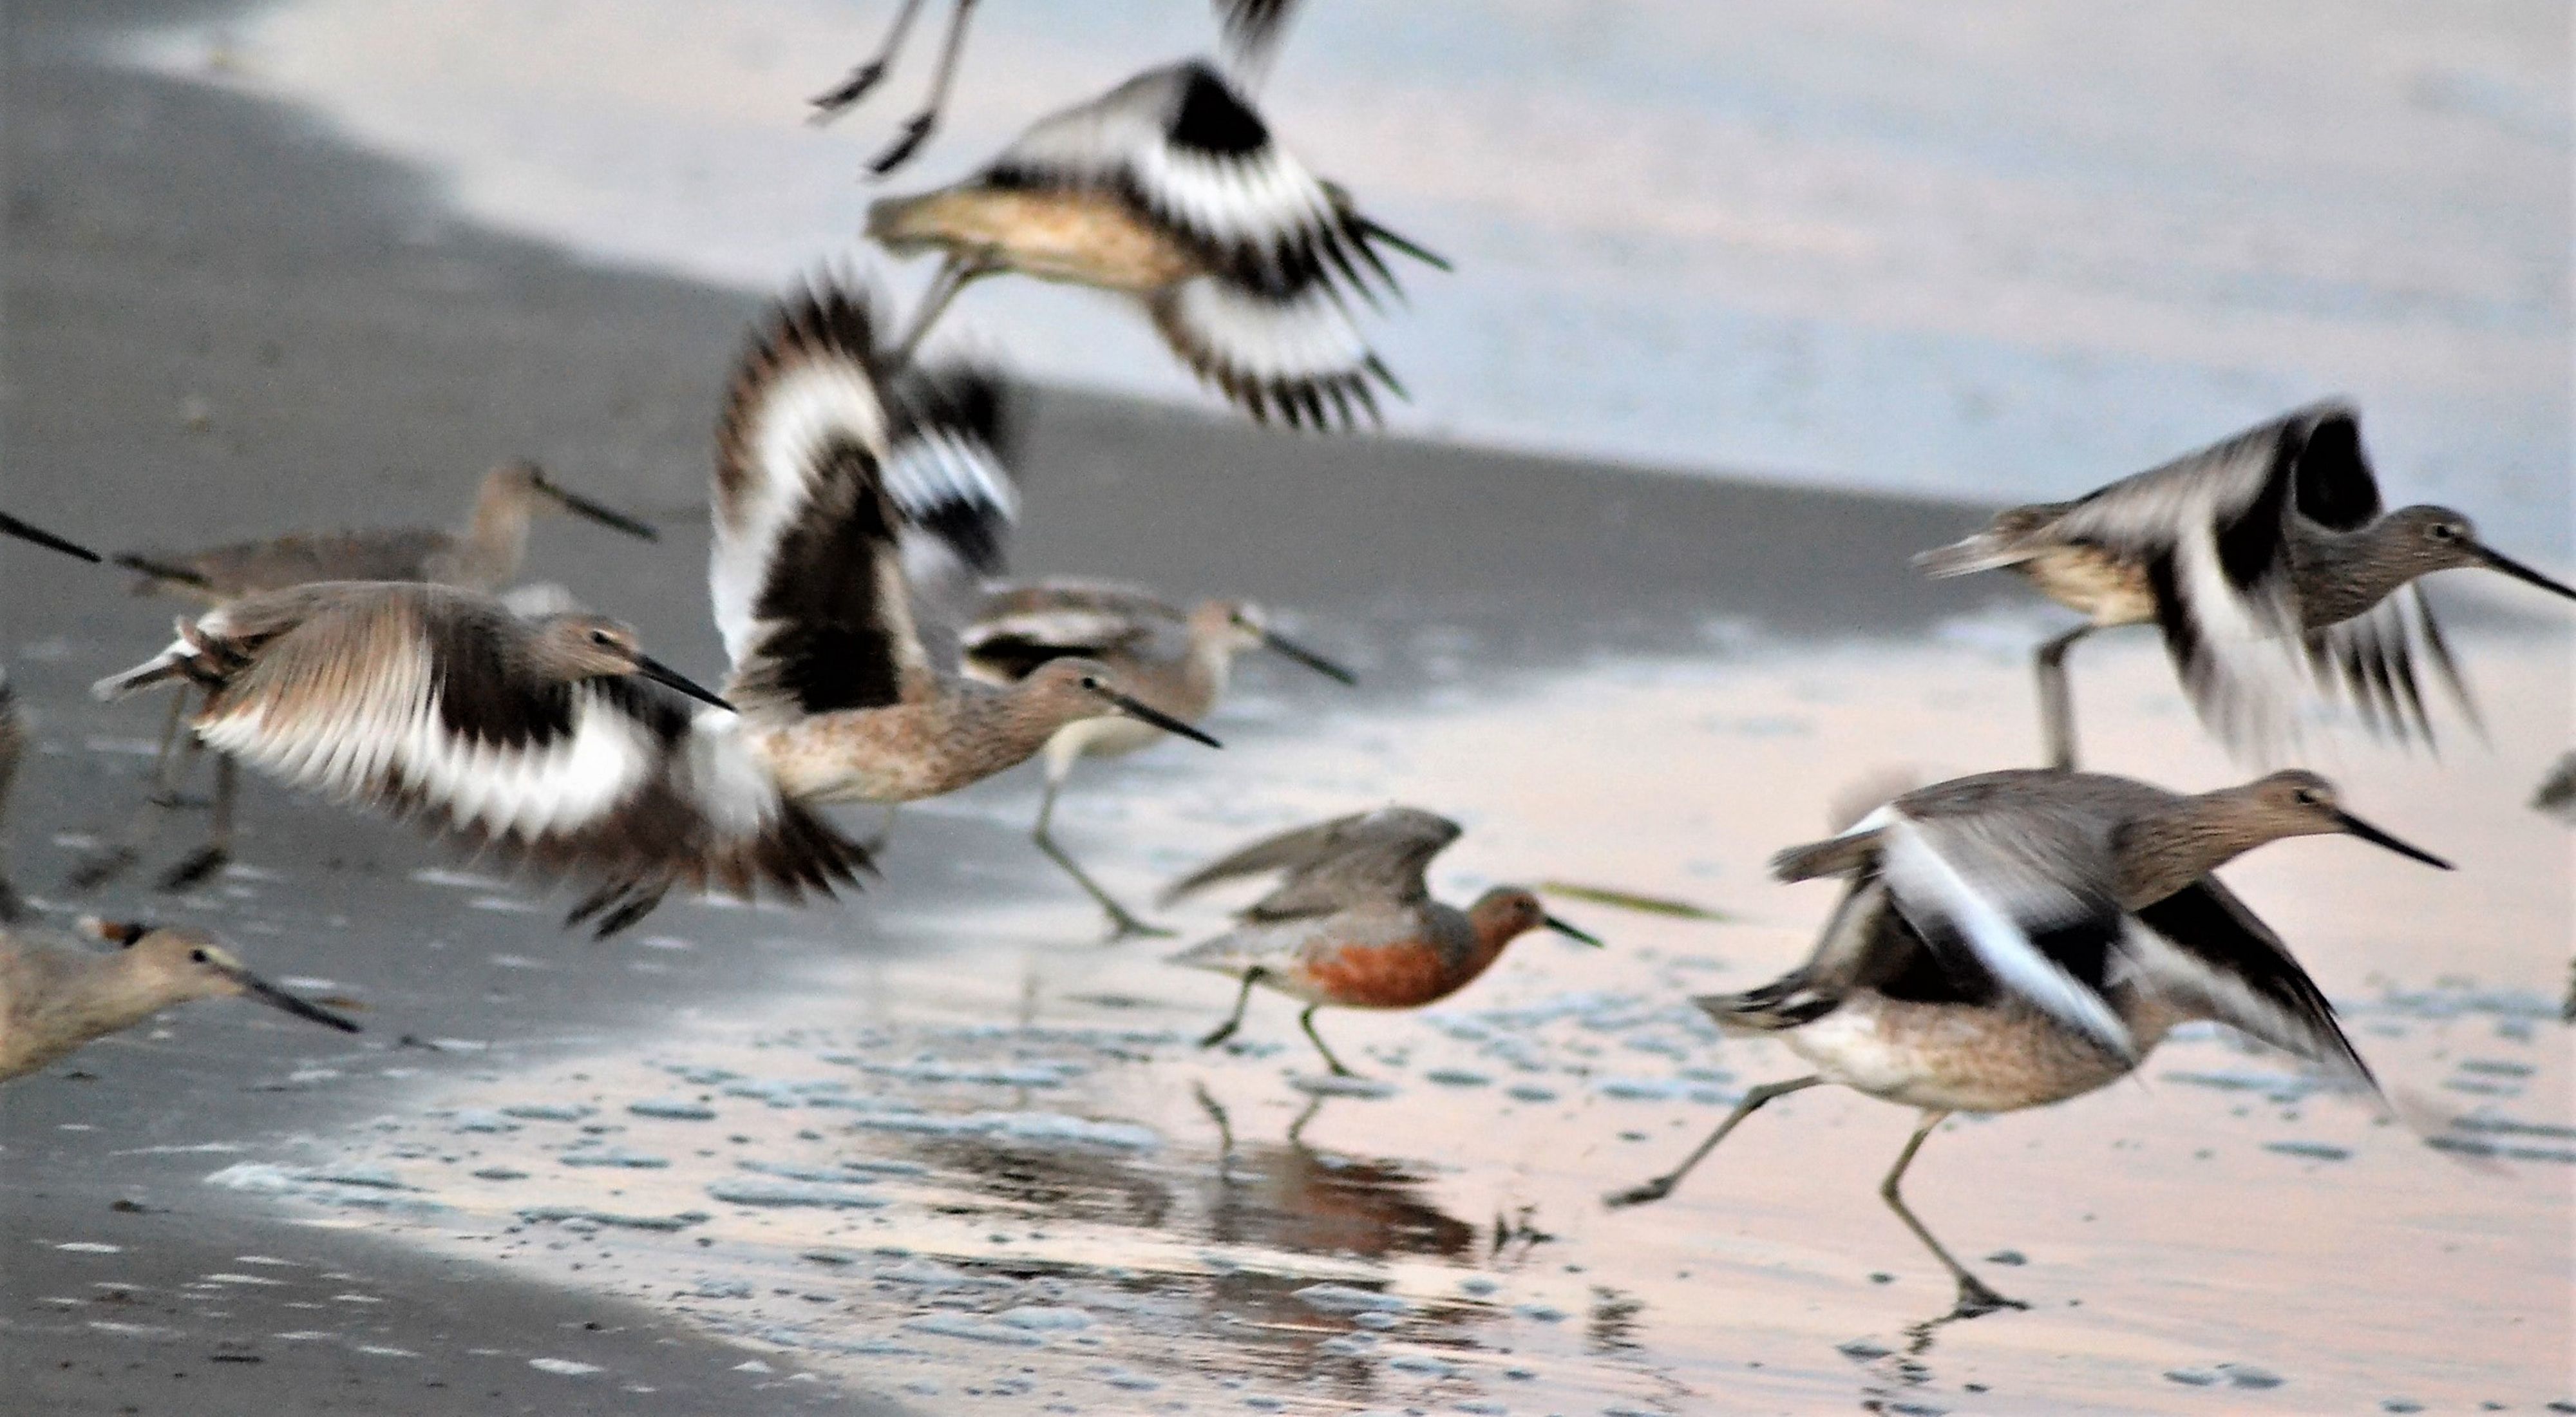 Several birds walk and fly as waves crash onto a beach.